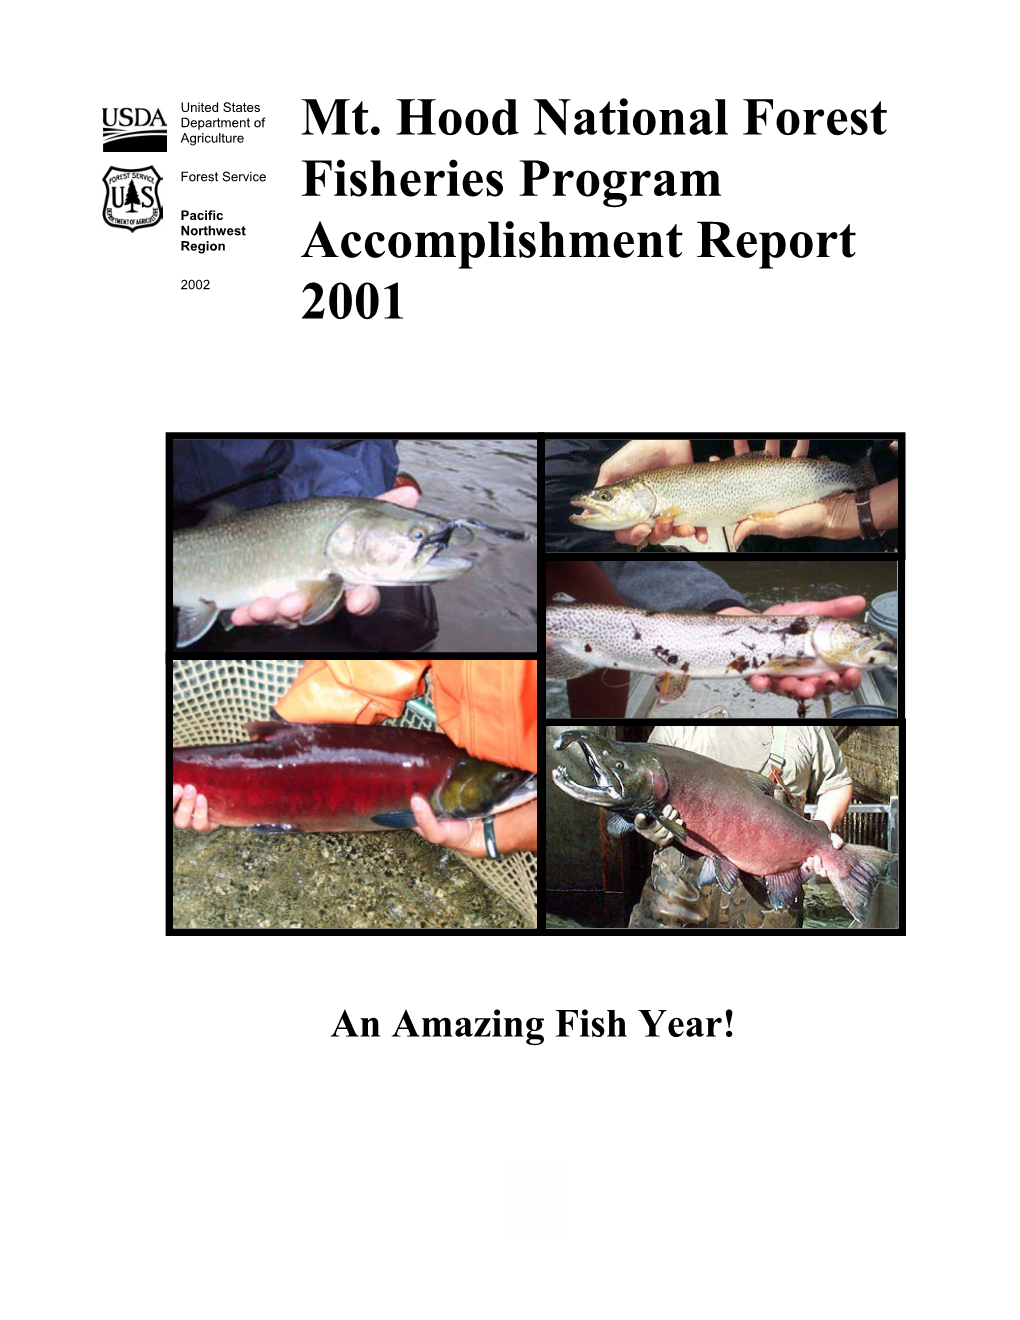 Mt. Hood National Forest Fisheries Program Accomplishment Report